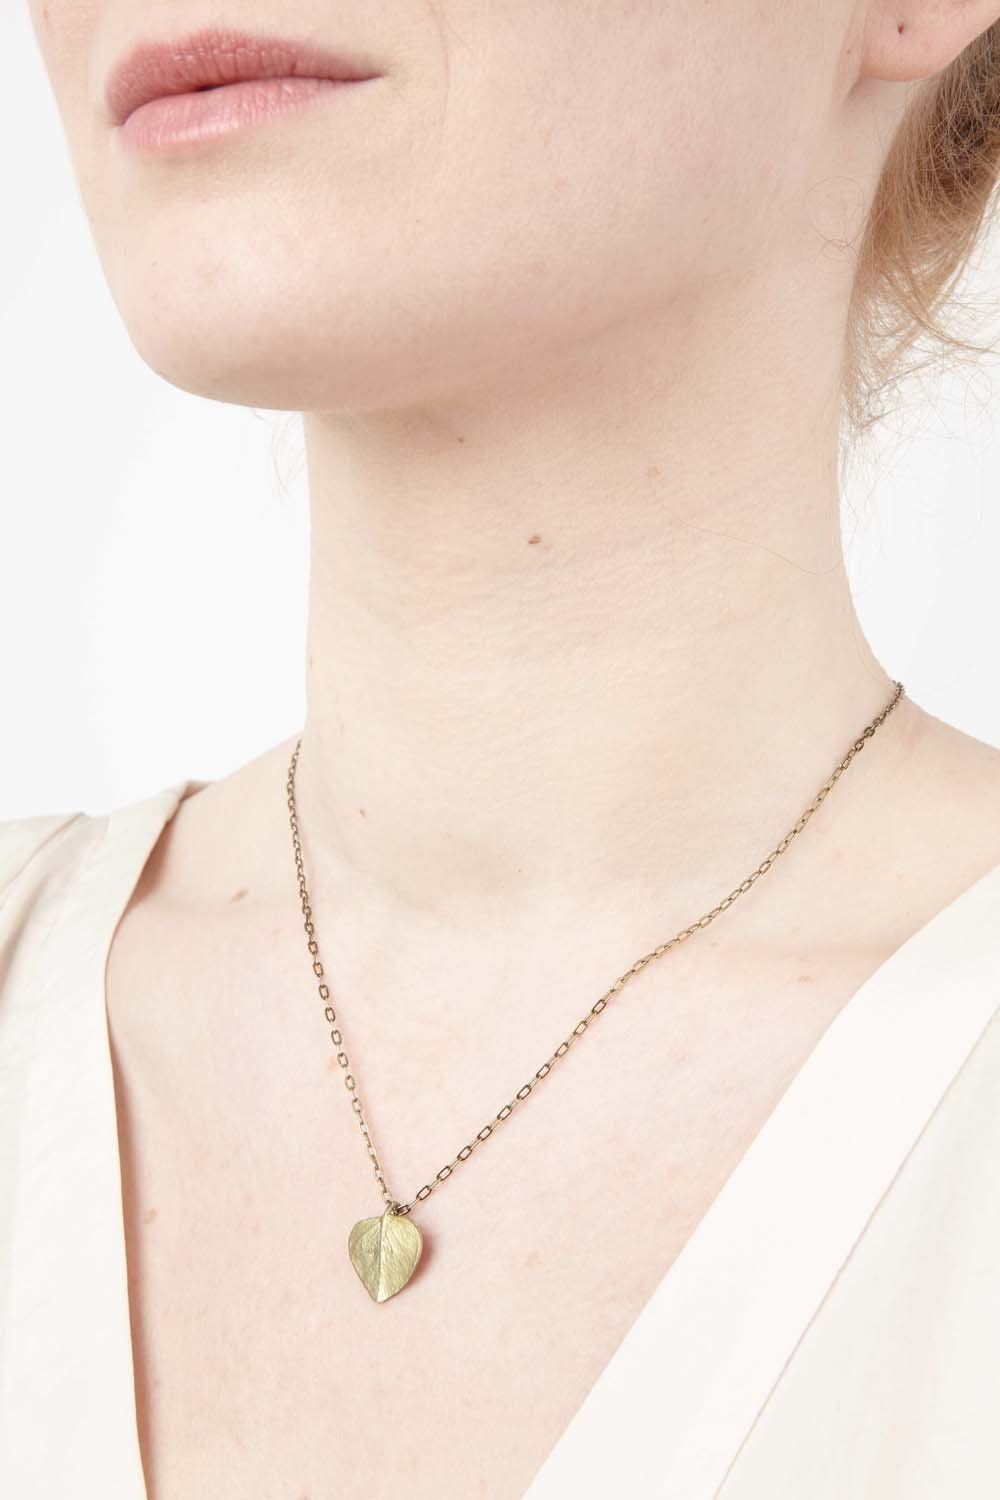 Eucalyptus Leaf Pendant - The Nancy Smillie Shop - Art, Jewellery & Designer Gifts Glasgow